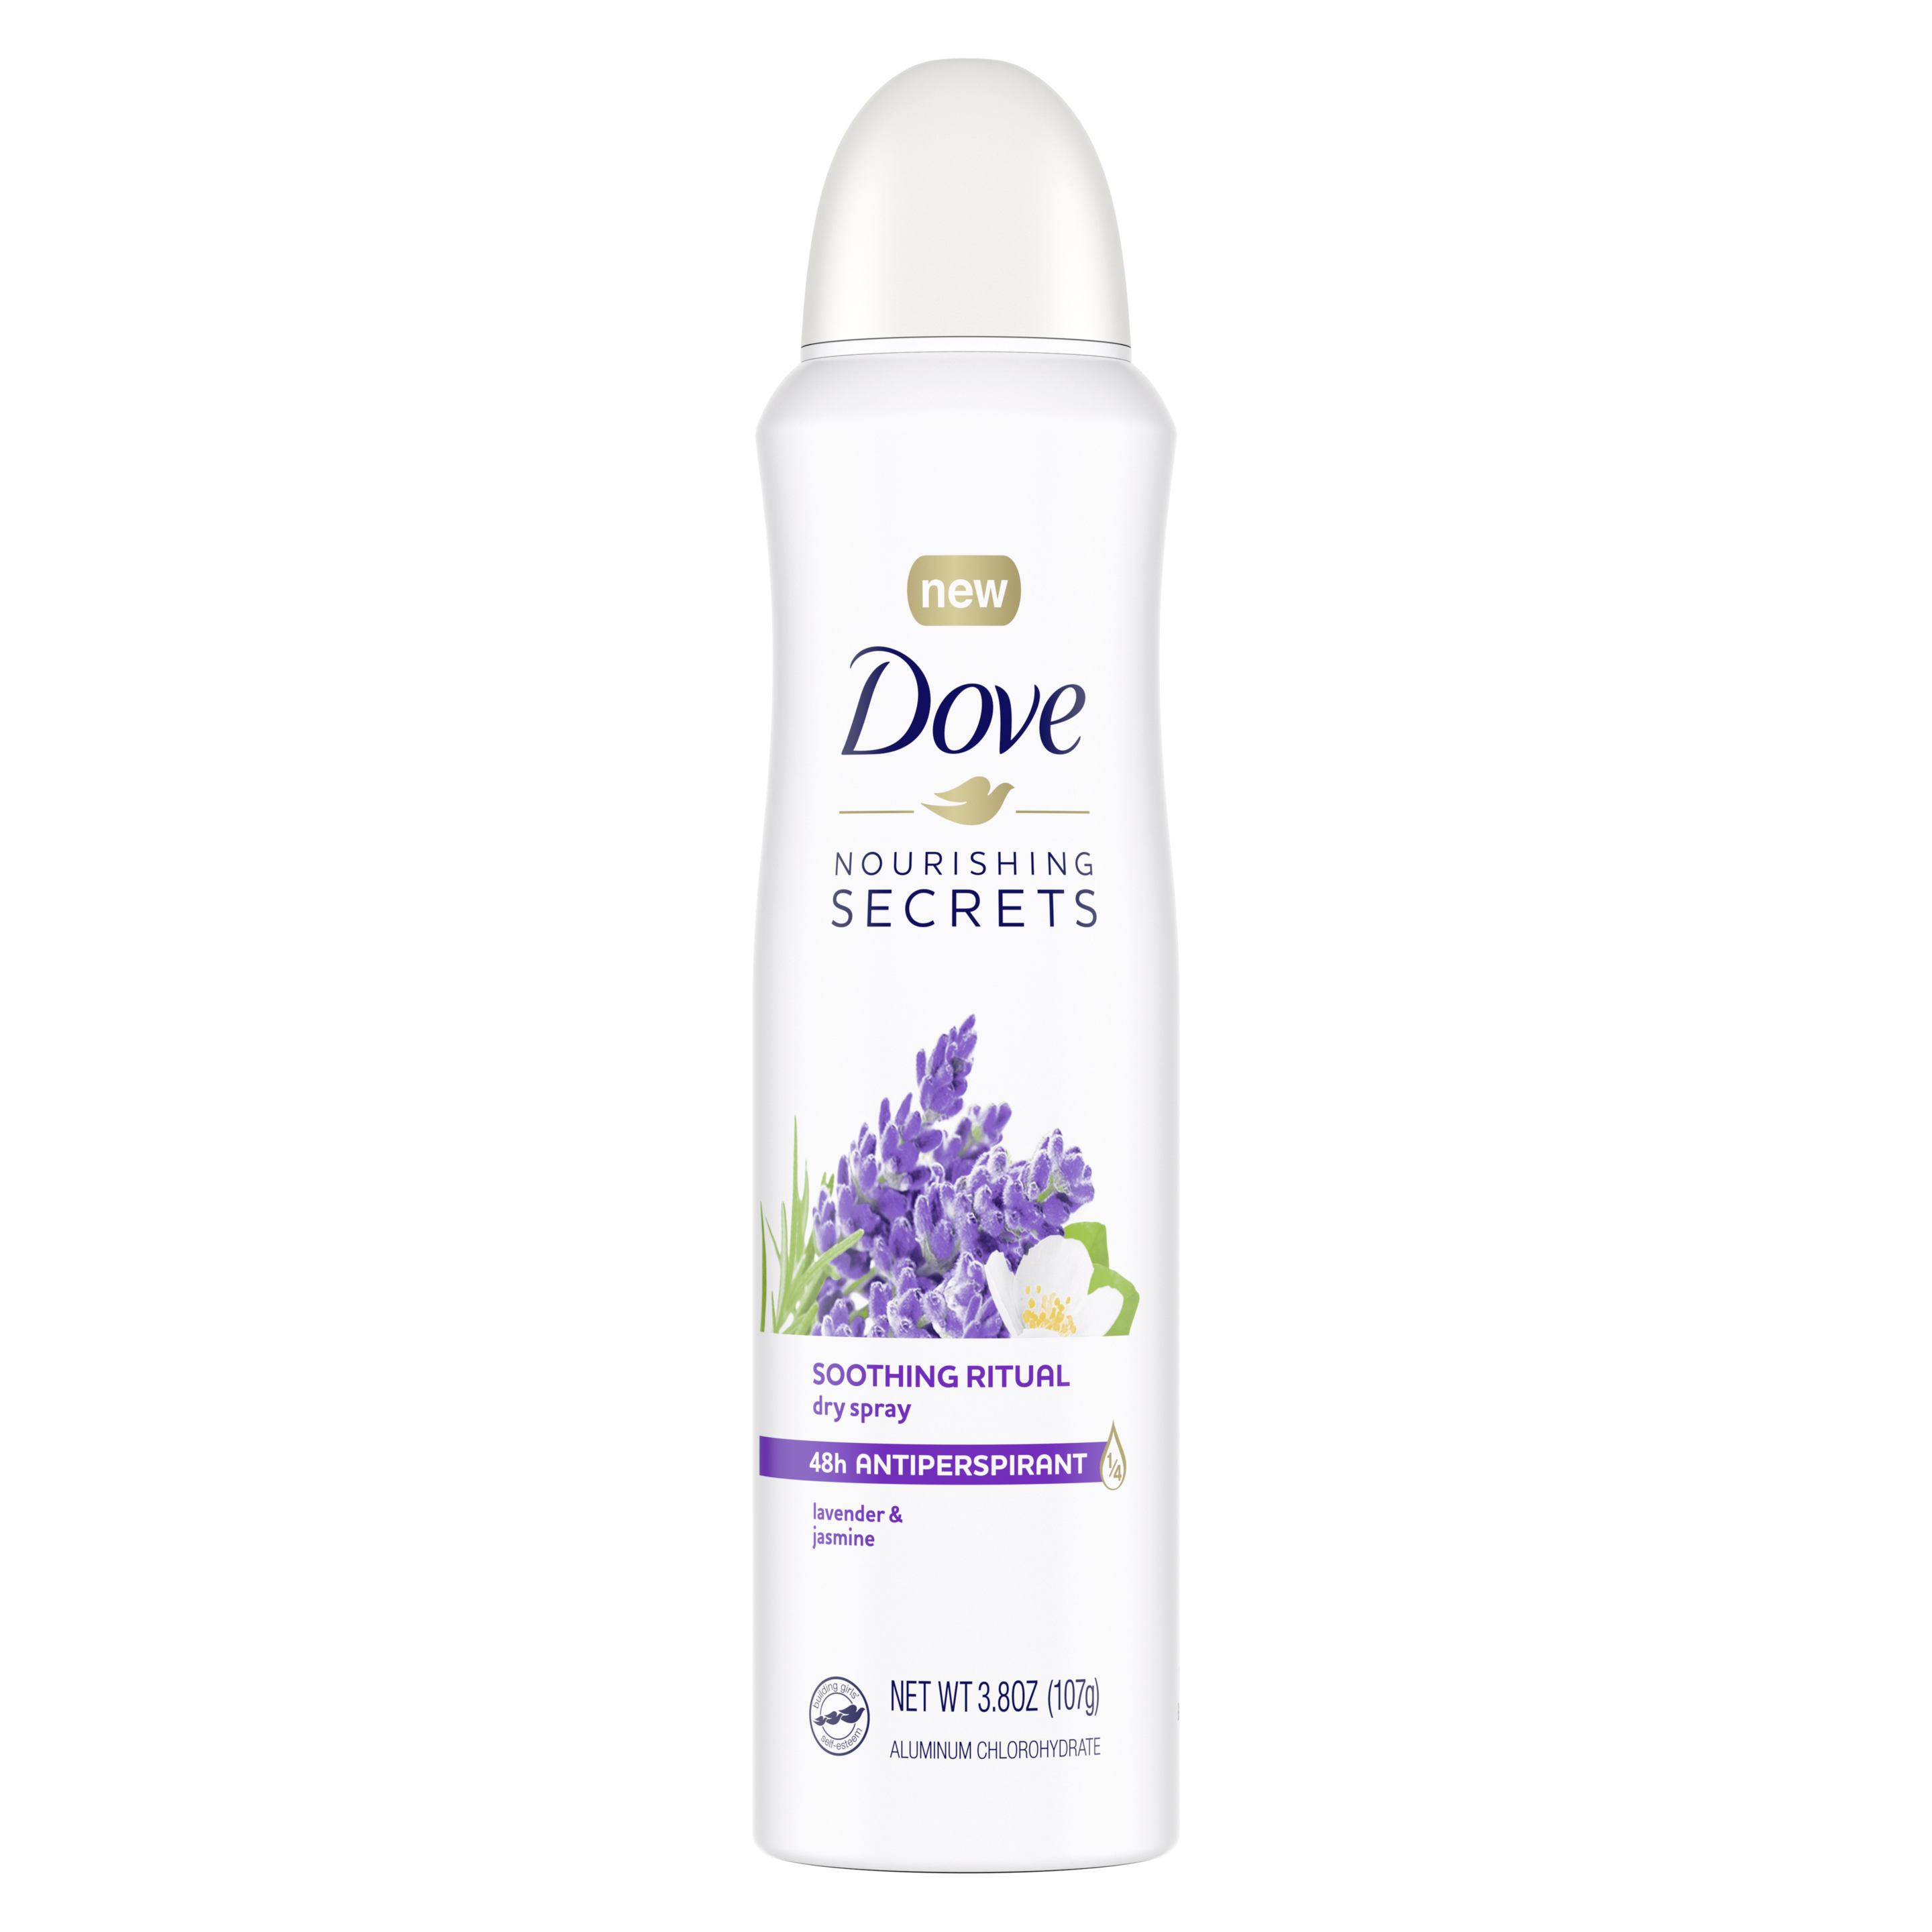 Dove Nourishing Secrets Dry Spray Antiperspirant Soothing Ritual Lavender and Jasmine